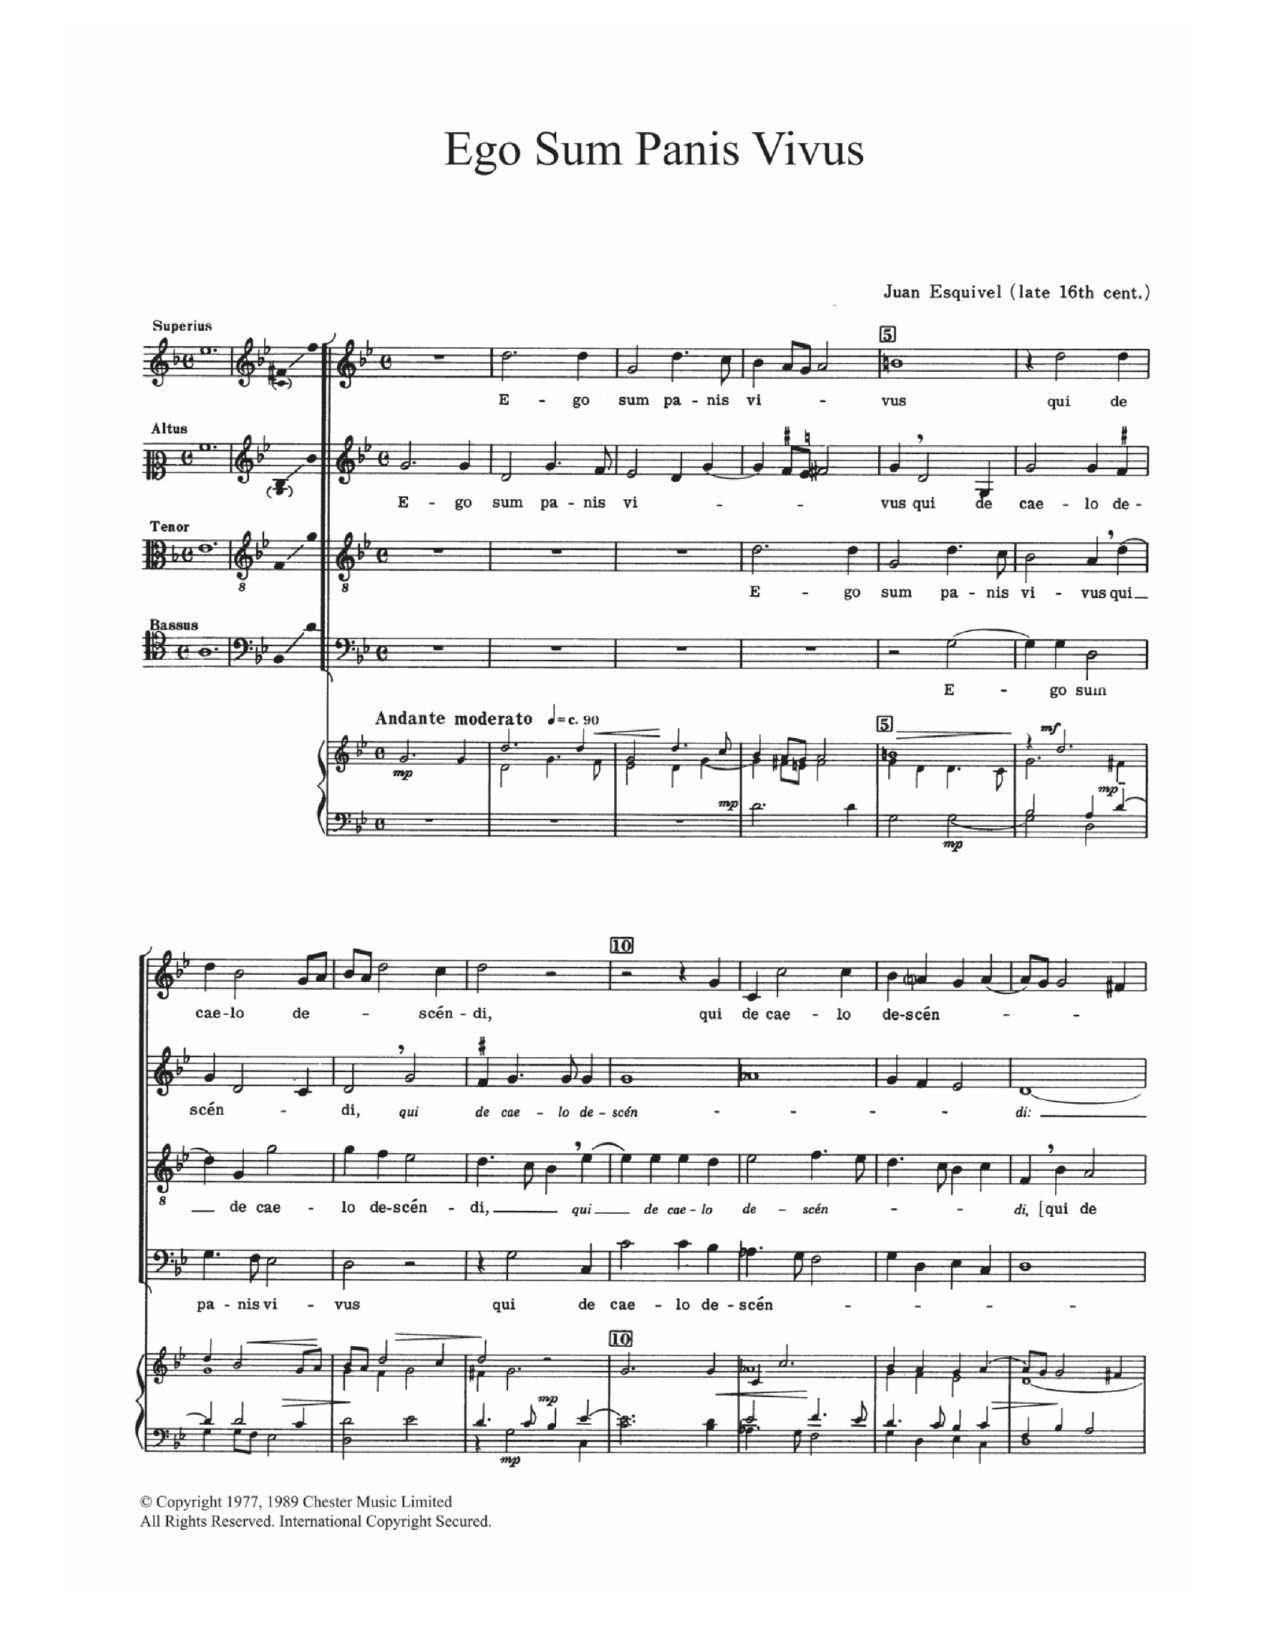 Juan Esquivel Ego Sum Panis Vivus Sheet Music Notes & Chords for SATB - Download or Print PDF